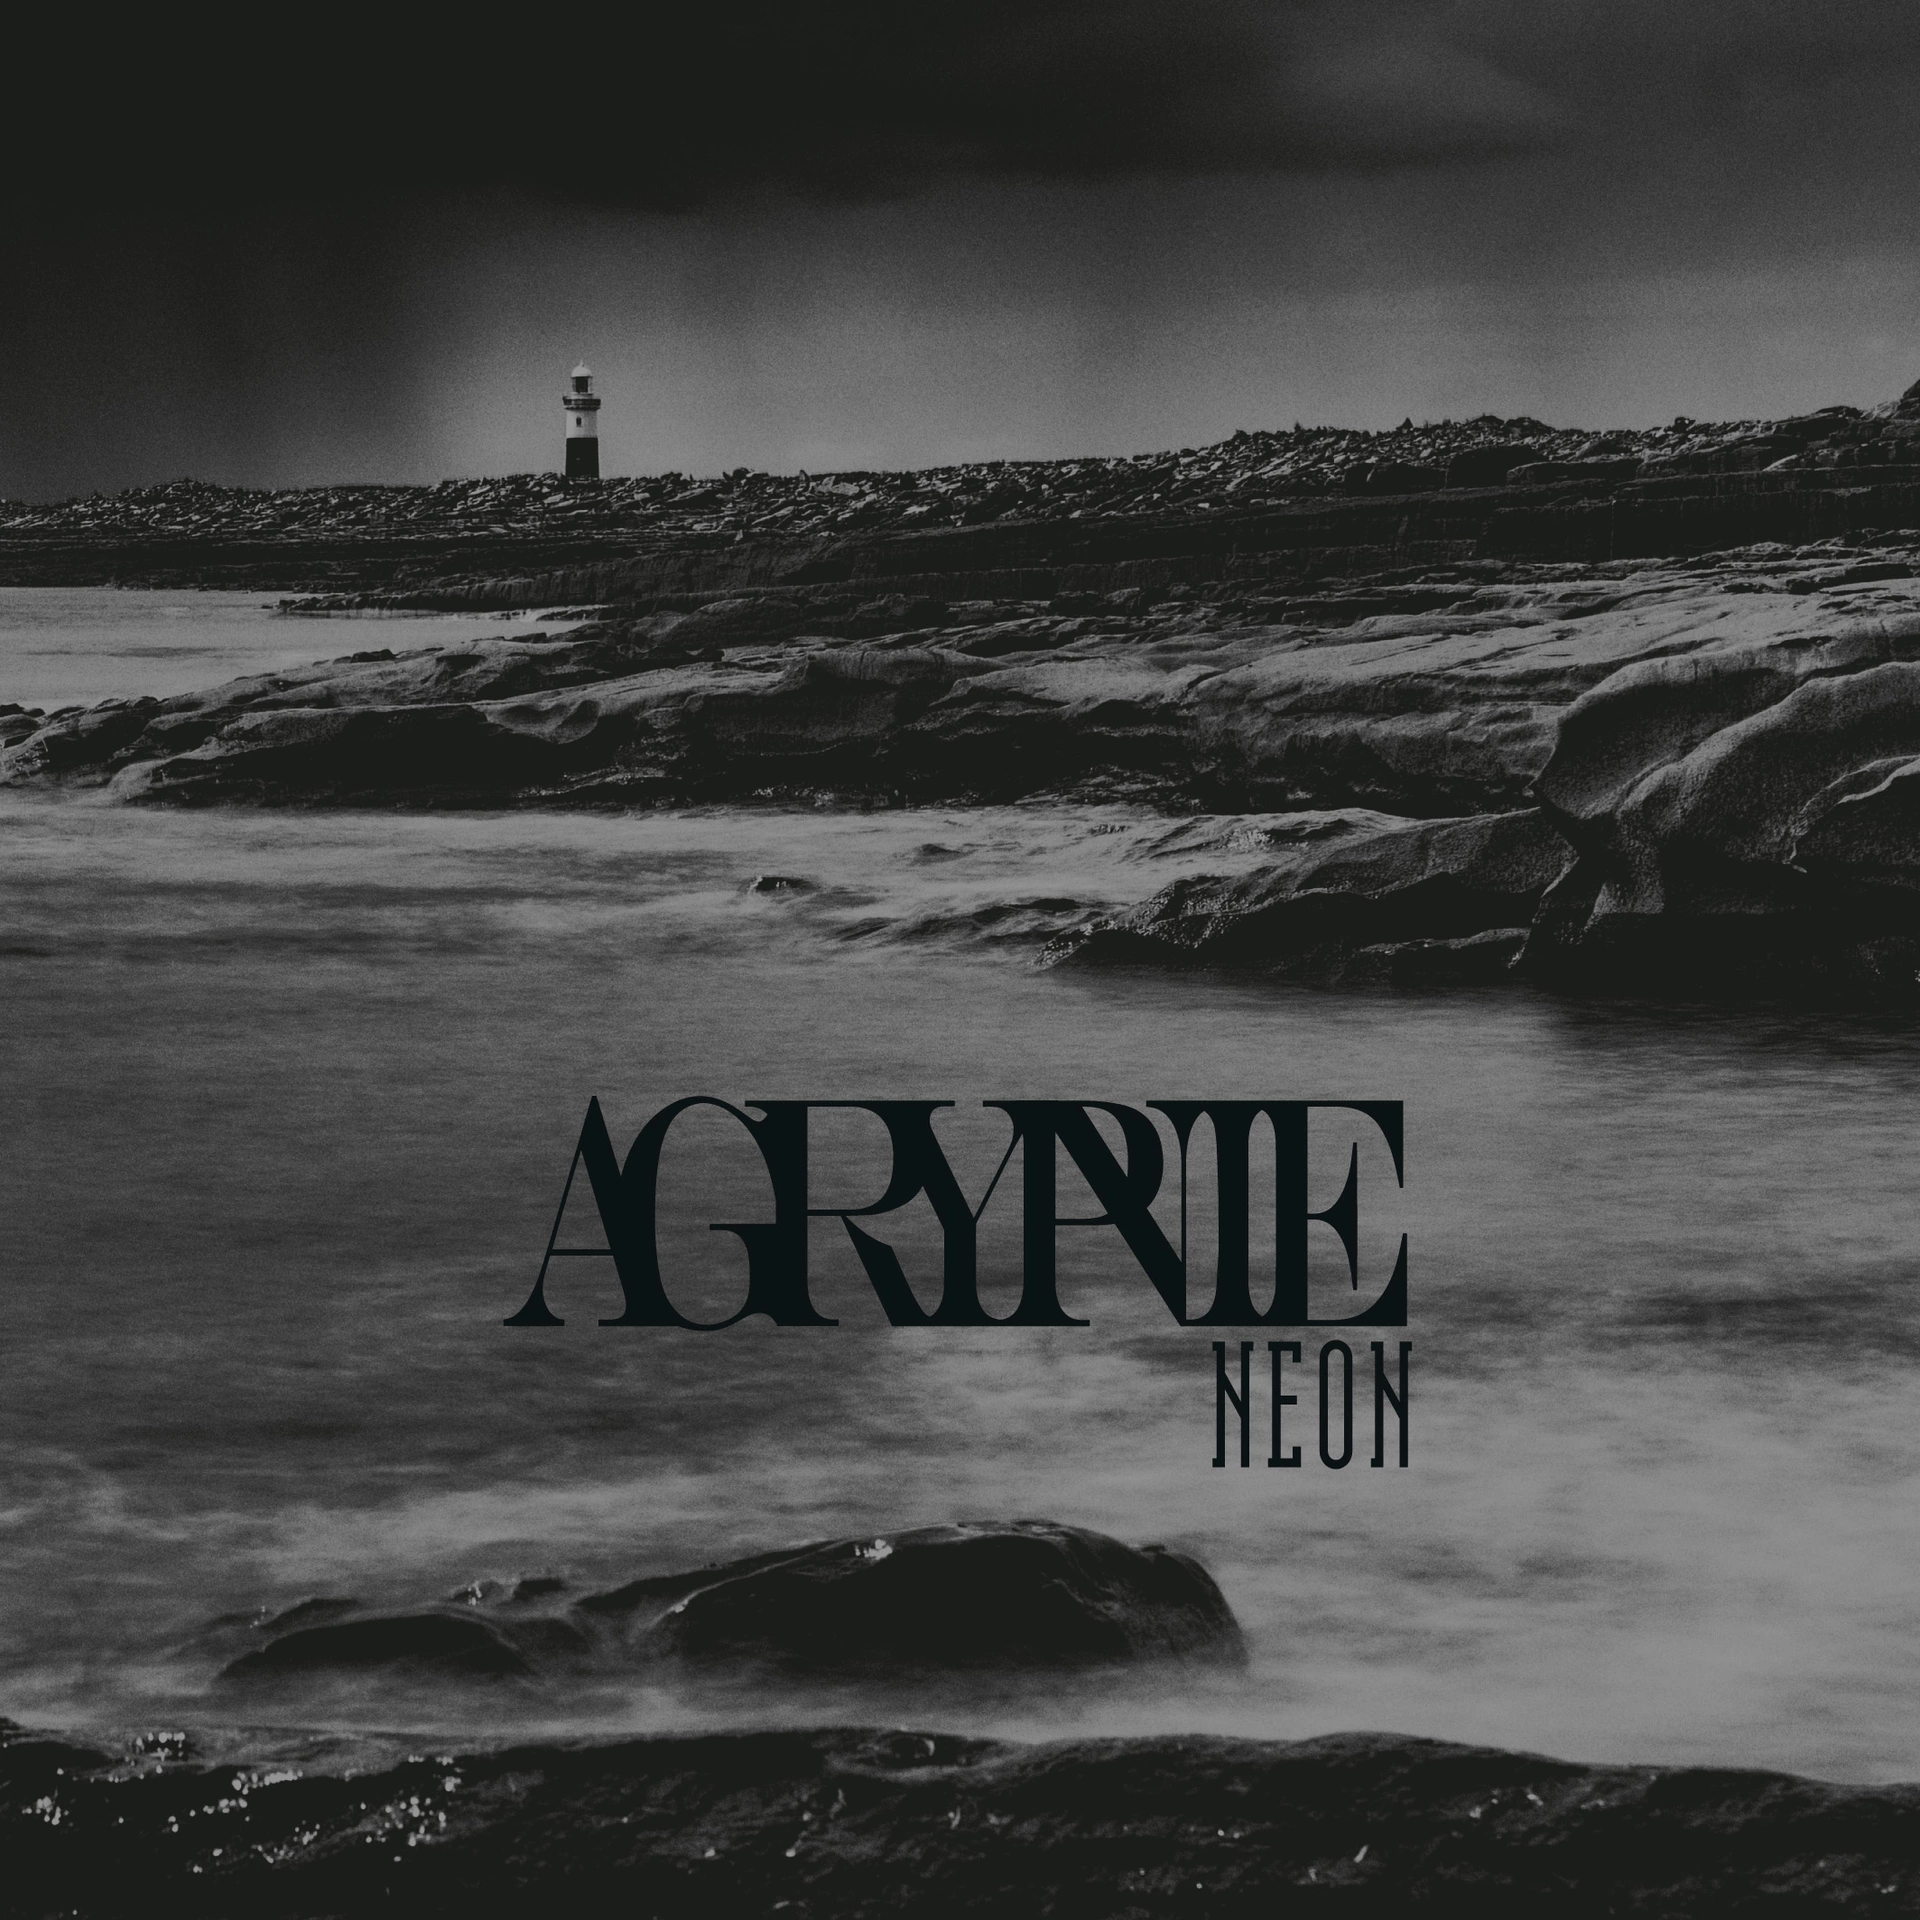 AGRYPNIE - Neon [BLACK 7" EP]